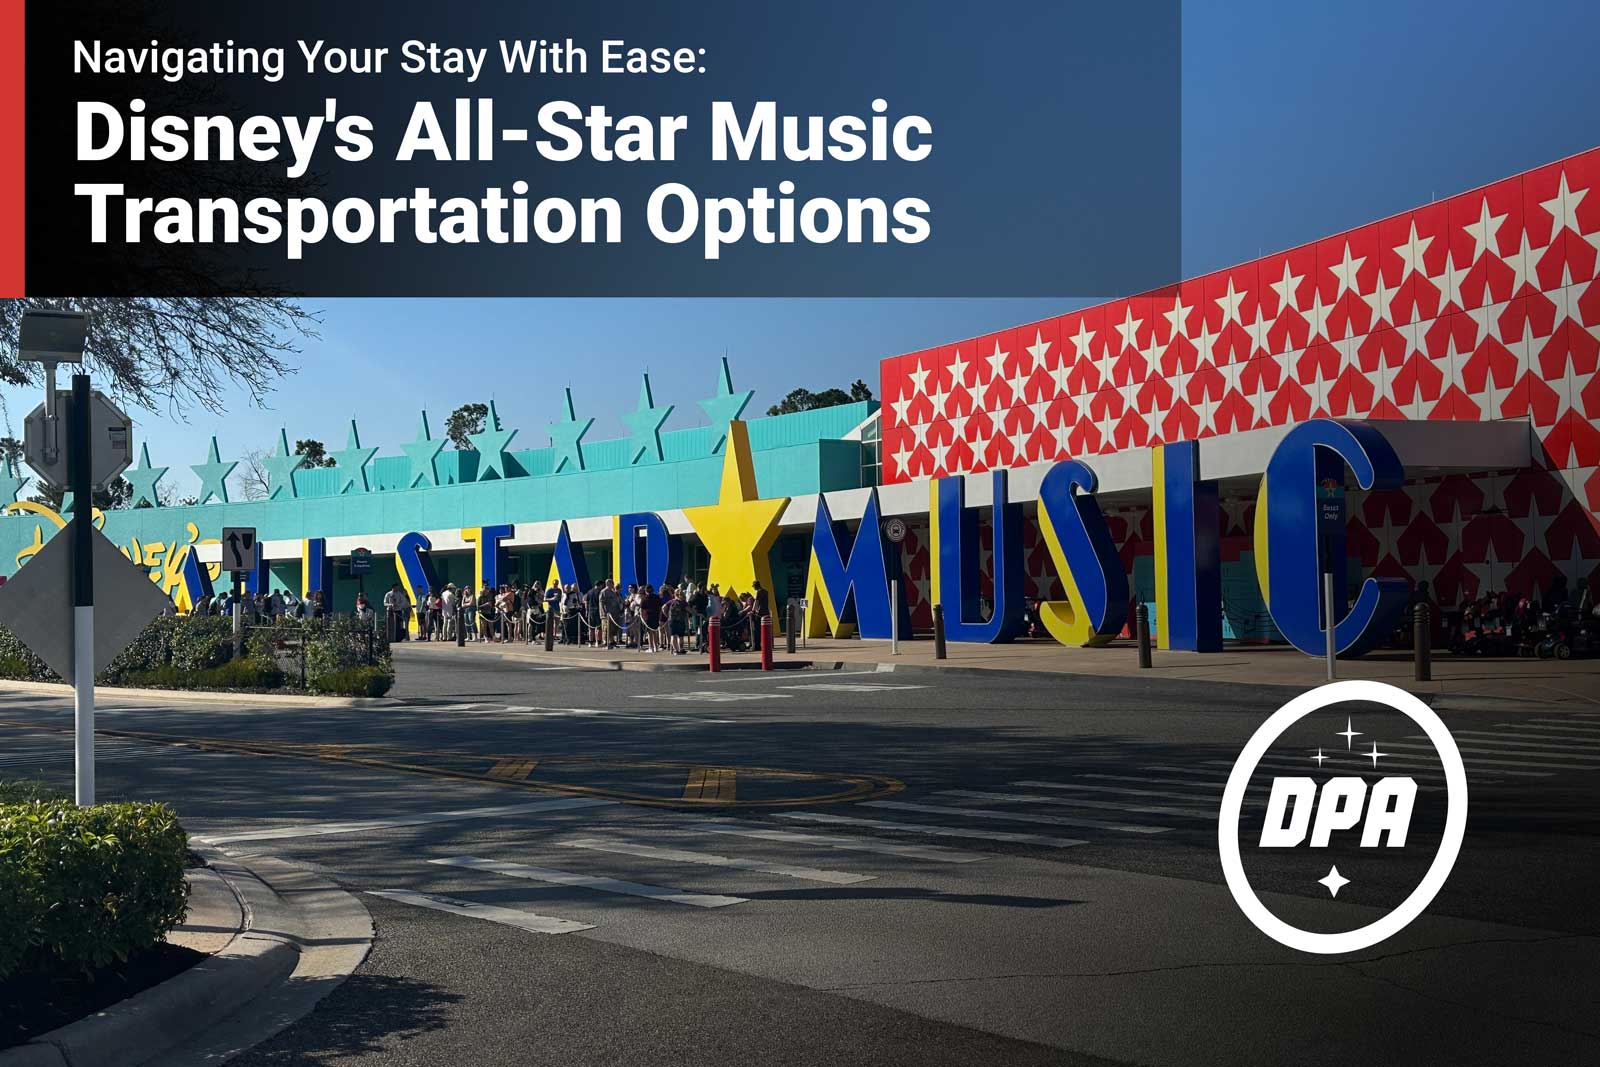 Disney's All-Star Music Transportation Options